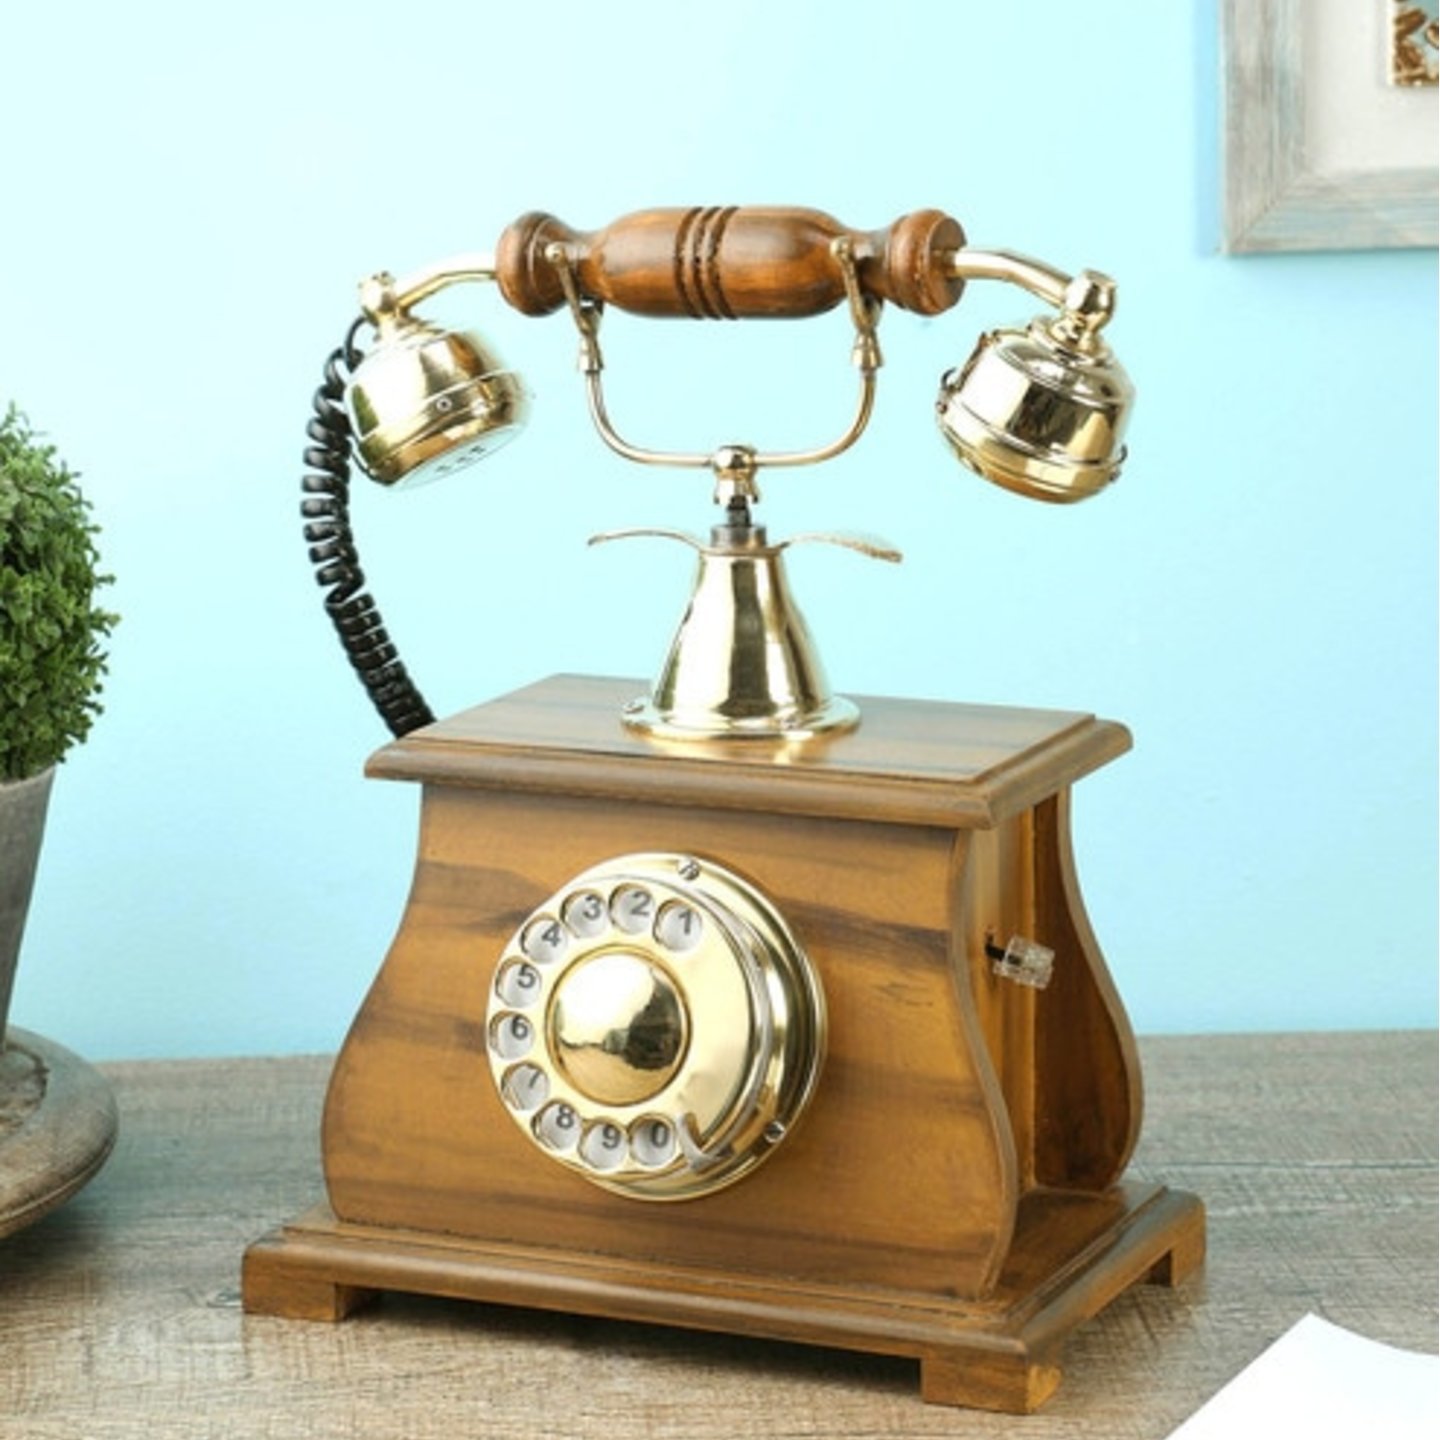 Retro Phone, Dial Phone, Bell Phone, Old Phone, Rotary Phone, Vintage